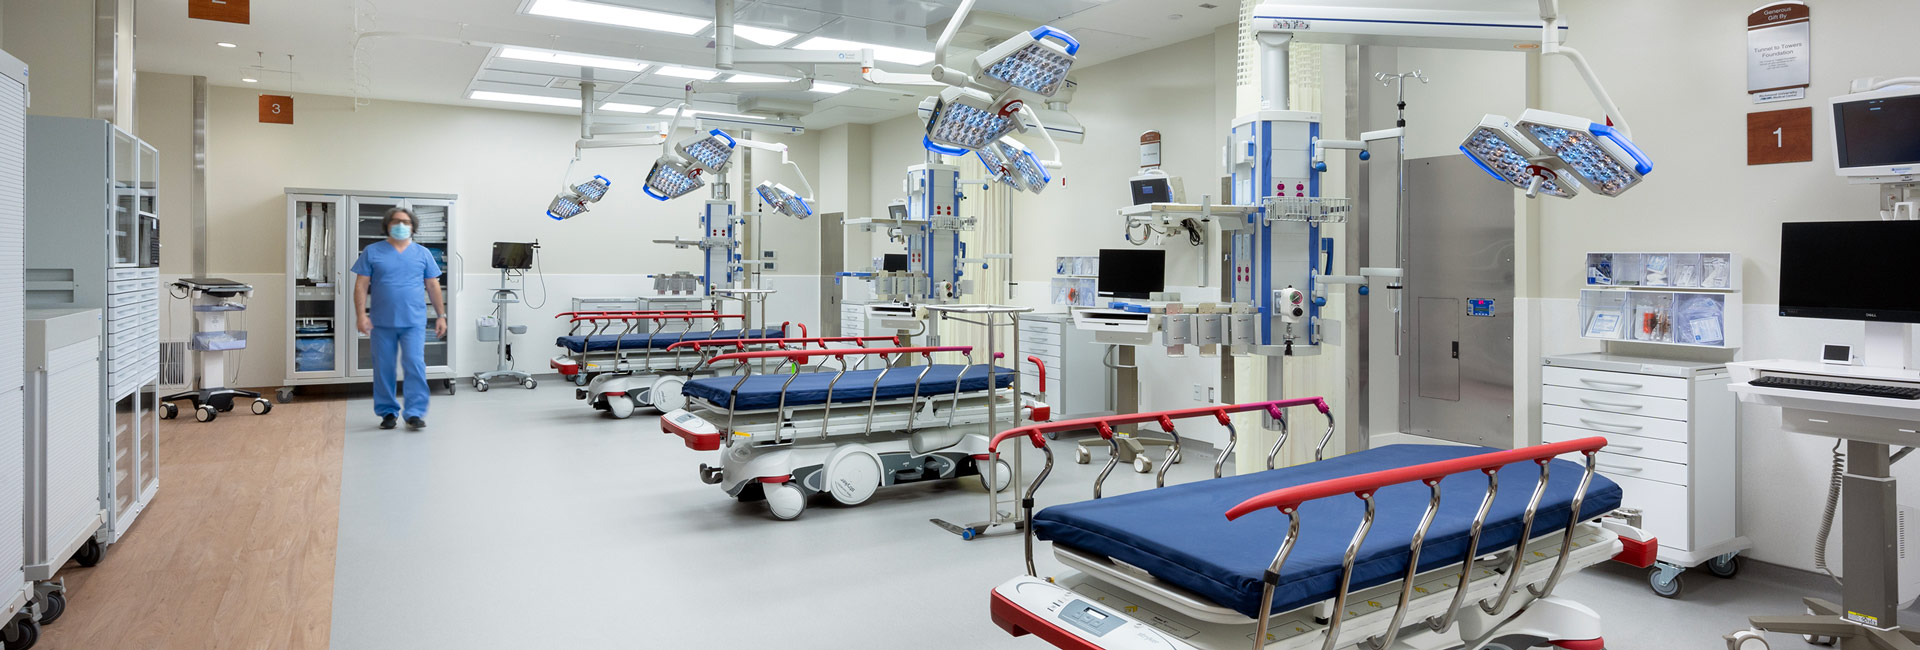 A room full of medical equipment